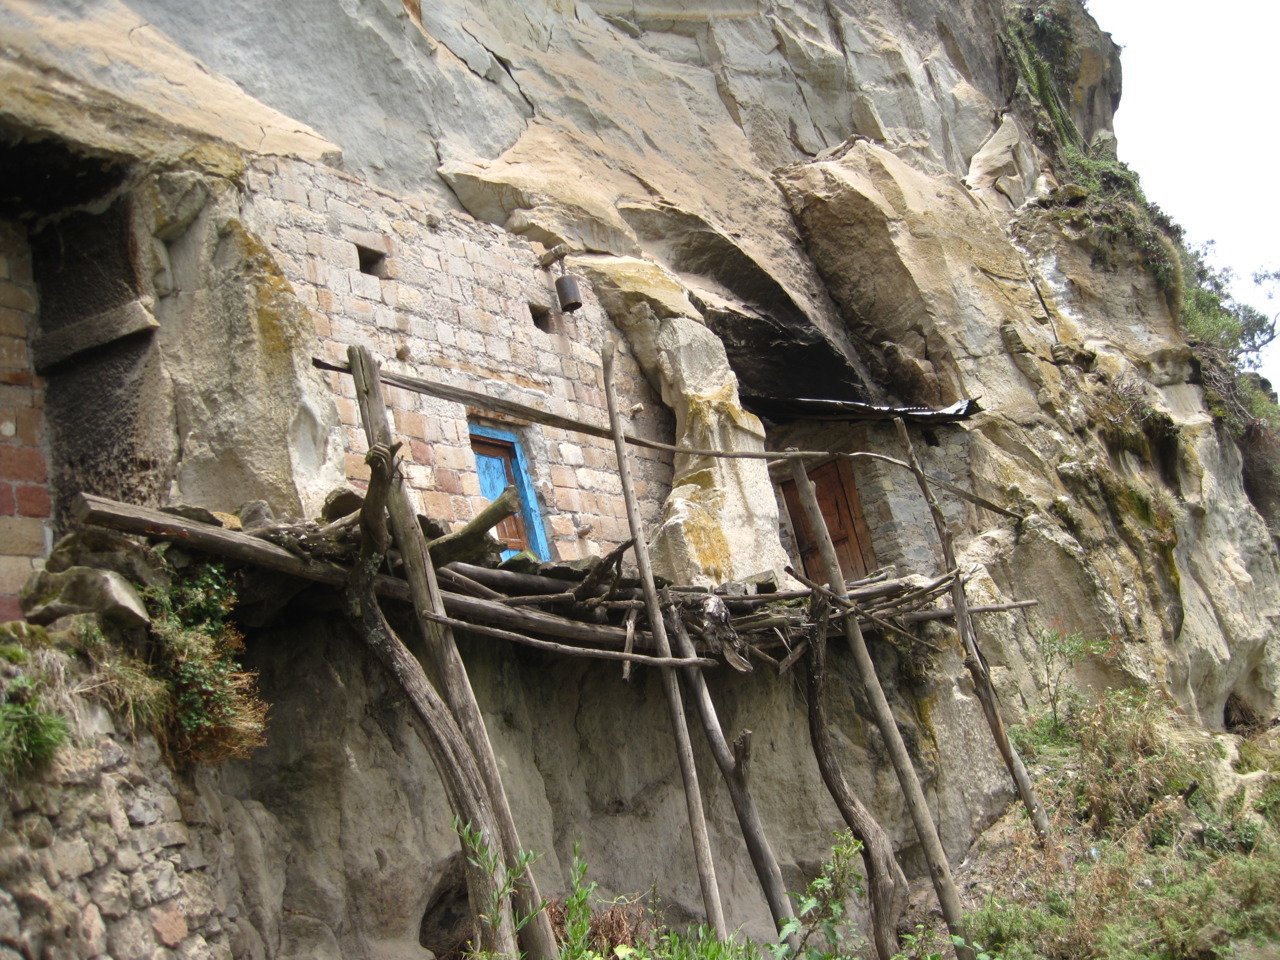 Bed Rock - Cabin Porn â€“ Rock carved dwelling near Lalibela, Ethiopia....